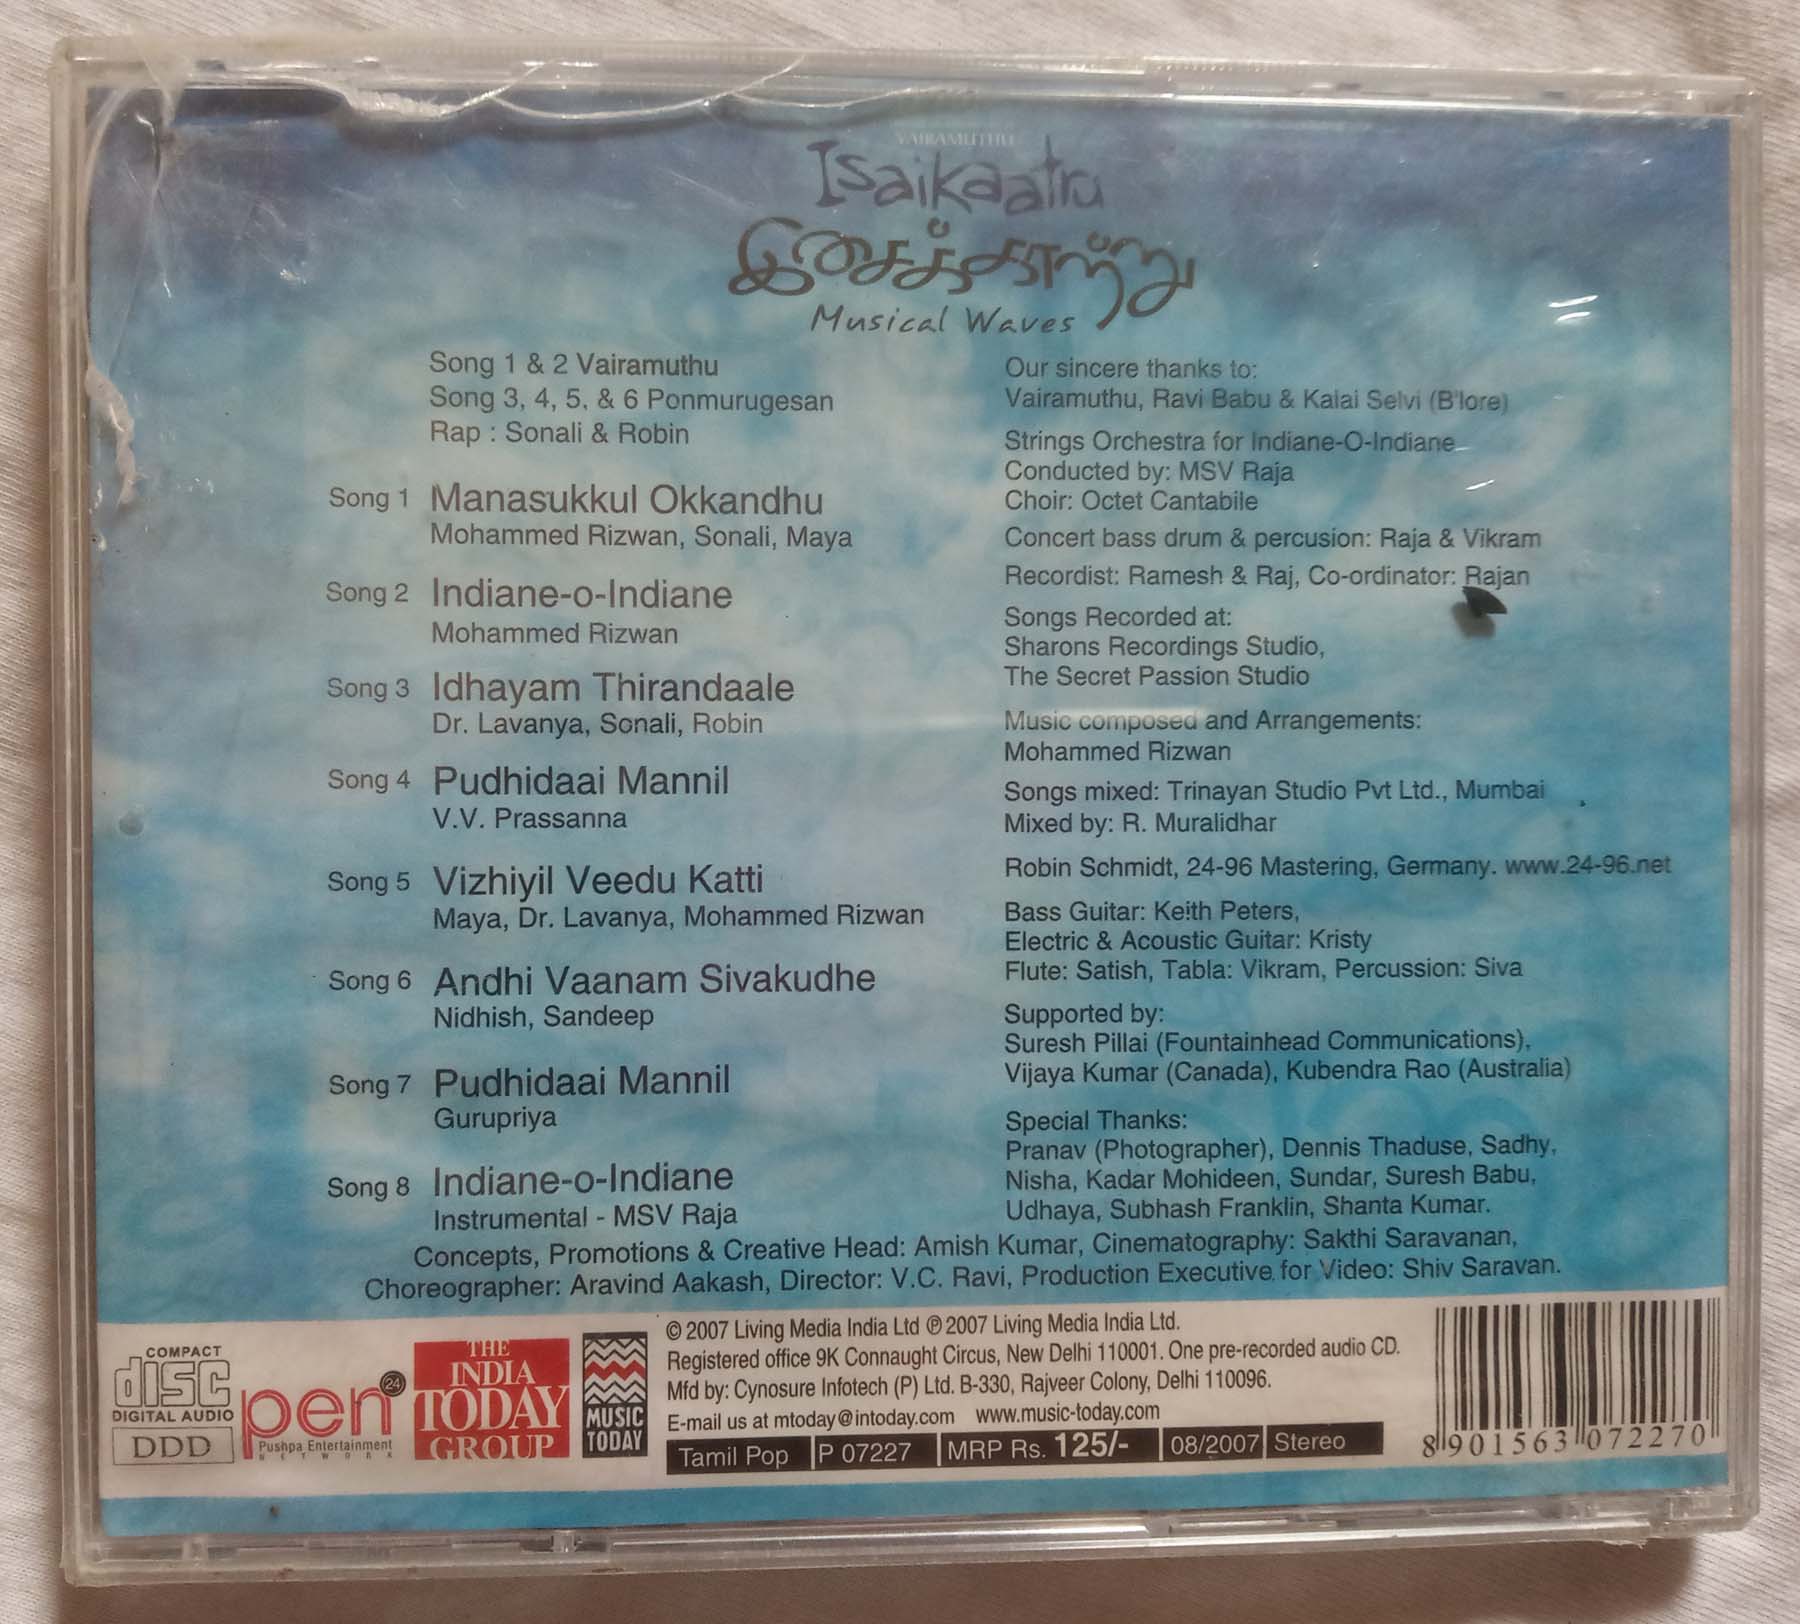 Vairamuthu Isaikaatru Musical Waves Tamil Audio CD banumass.com